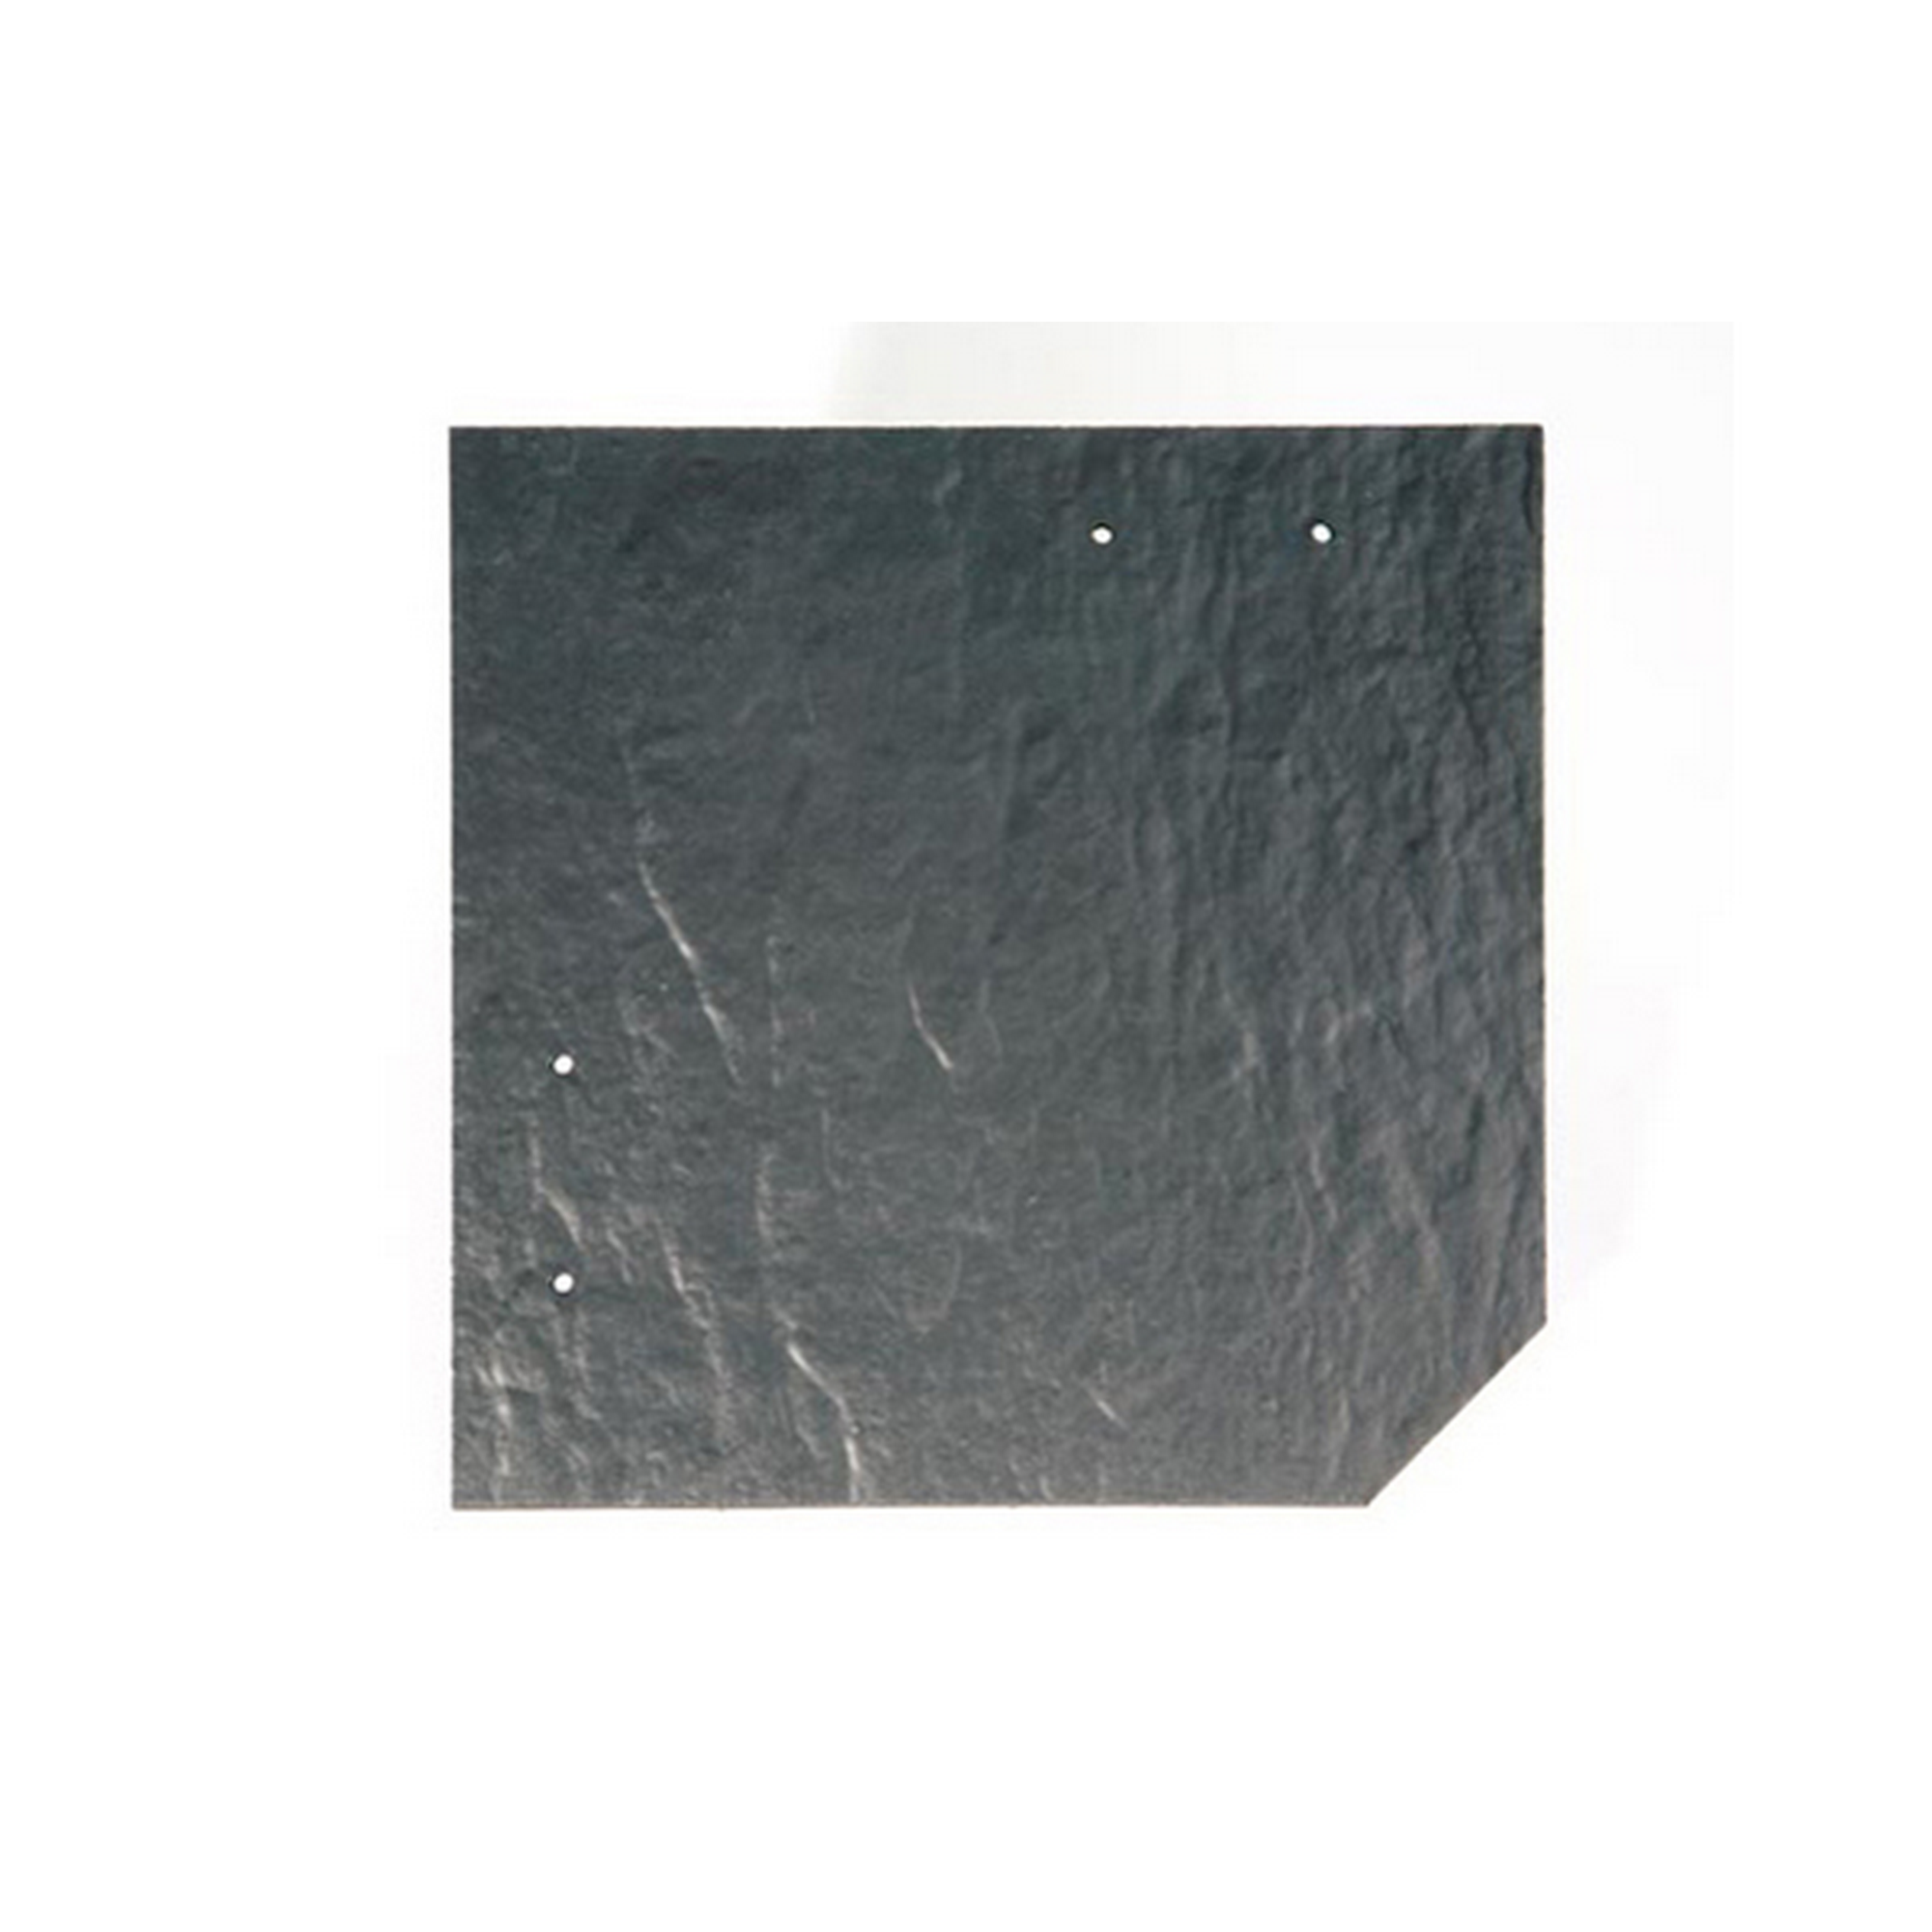 Carport 'Spreewald' schwarze Blende  585 x 589 cm imprägniert + product picture